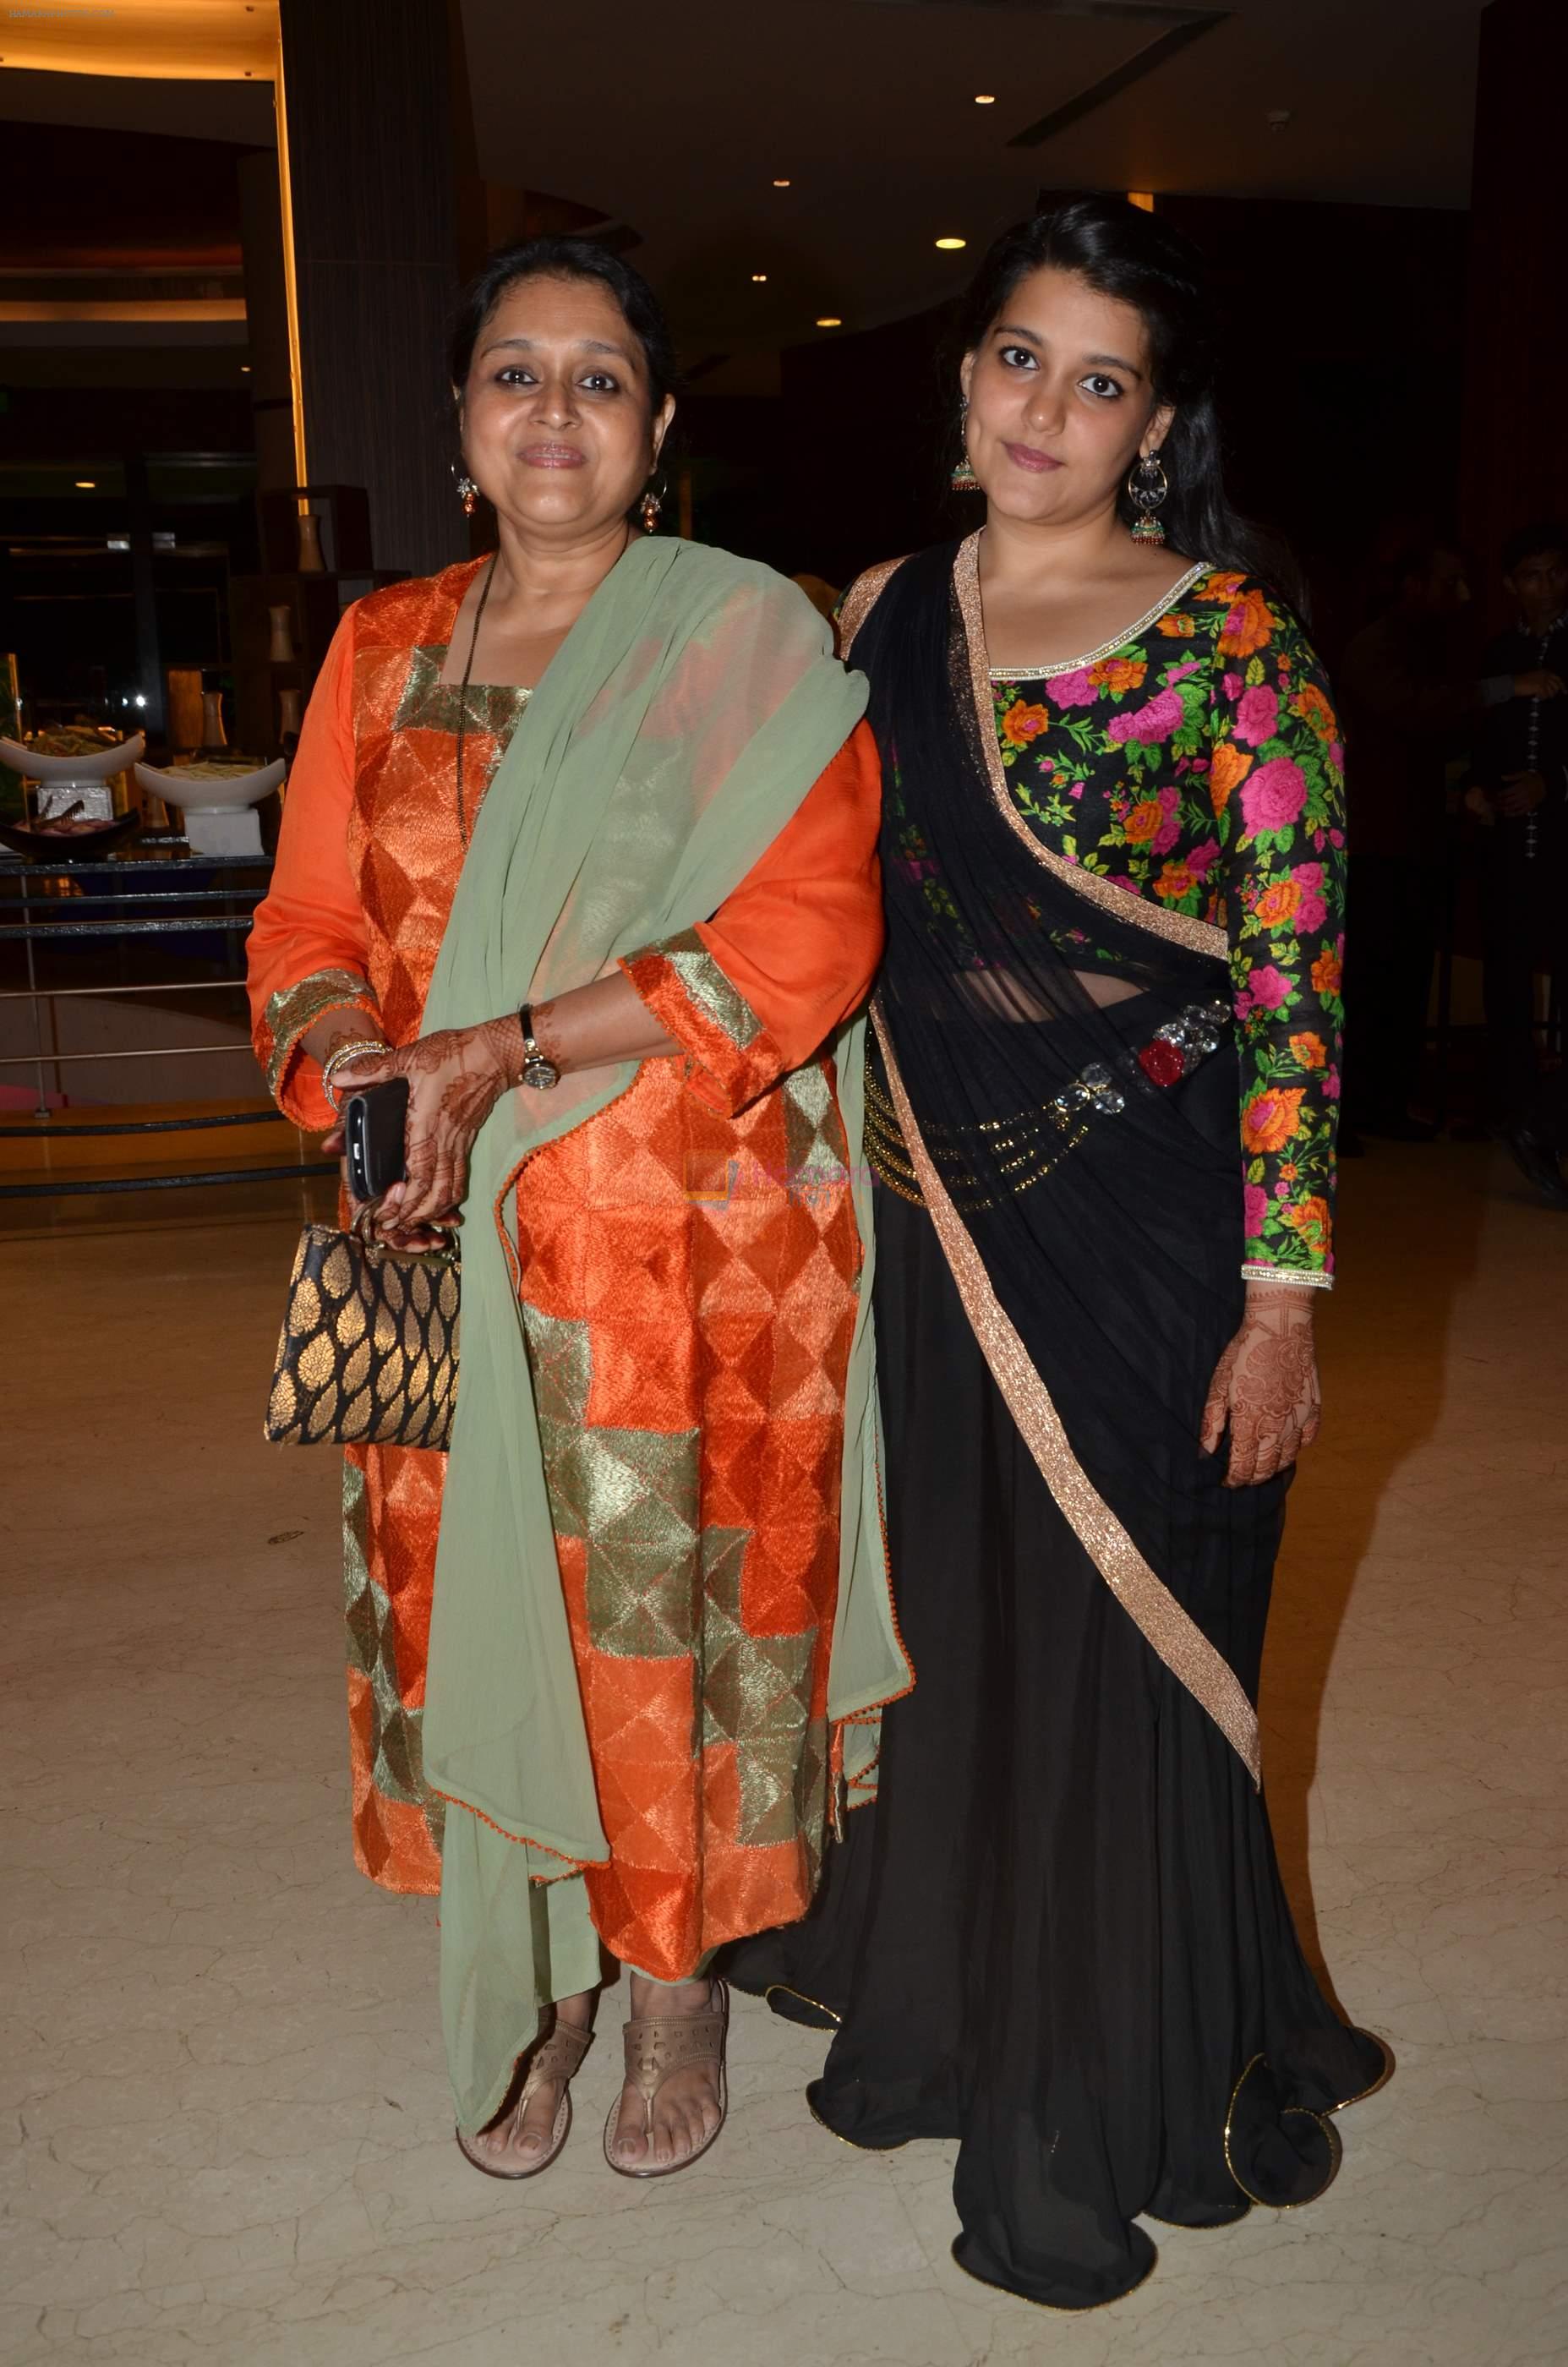 Supriya Pathak with her daughter at Karan Patel and Ankita Engagement and Sangeet Celebration in Novotel Hotel, Juhu on 1st May 2015